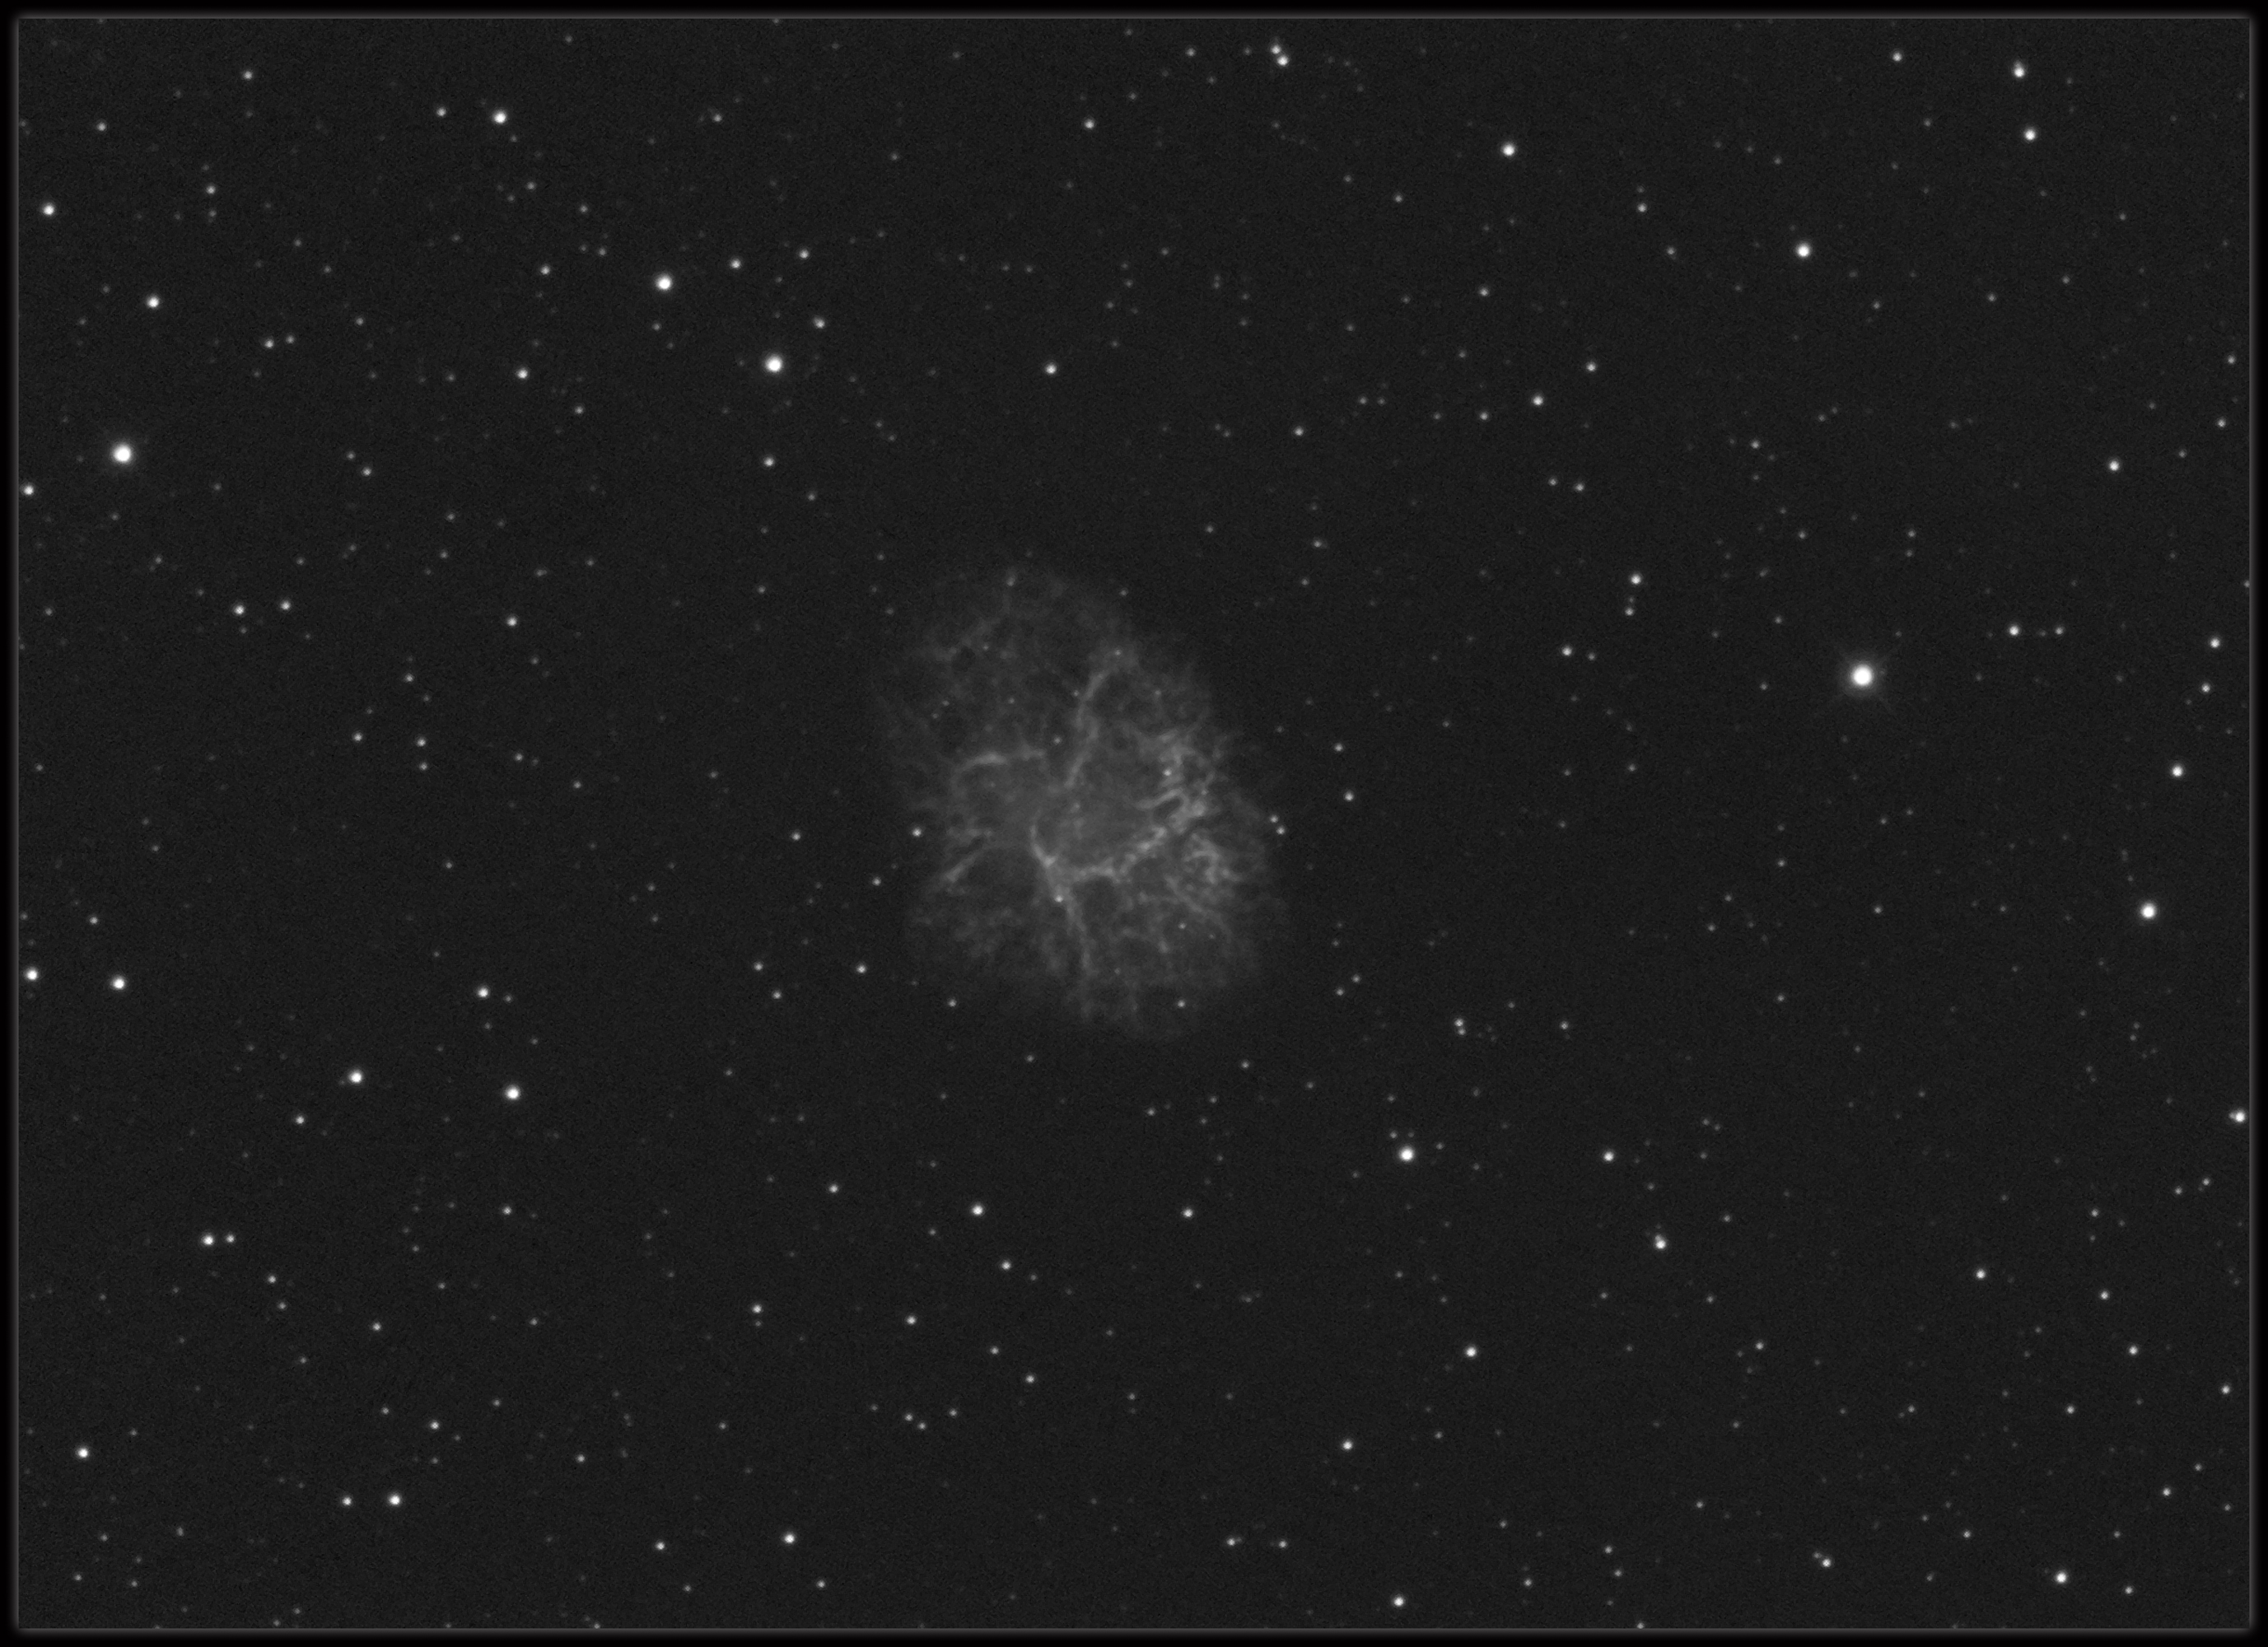 The crab nebula - Hydrogen Alpha only